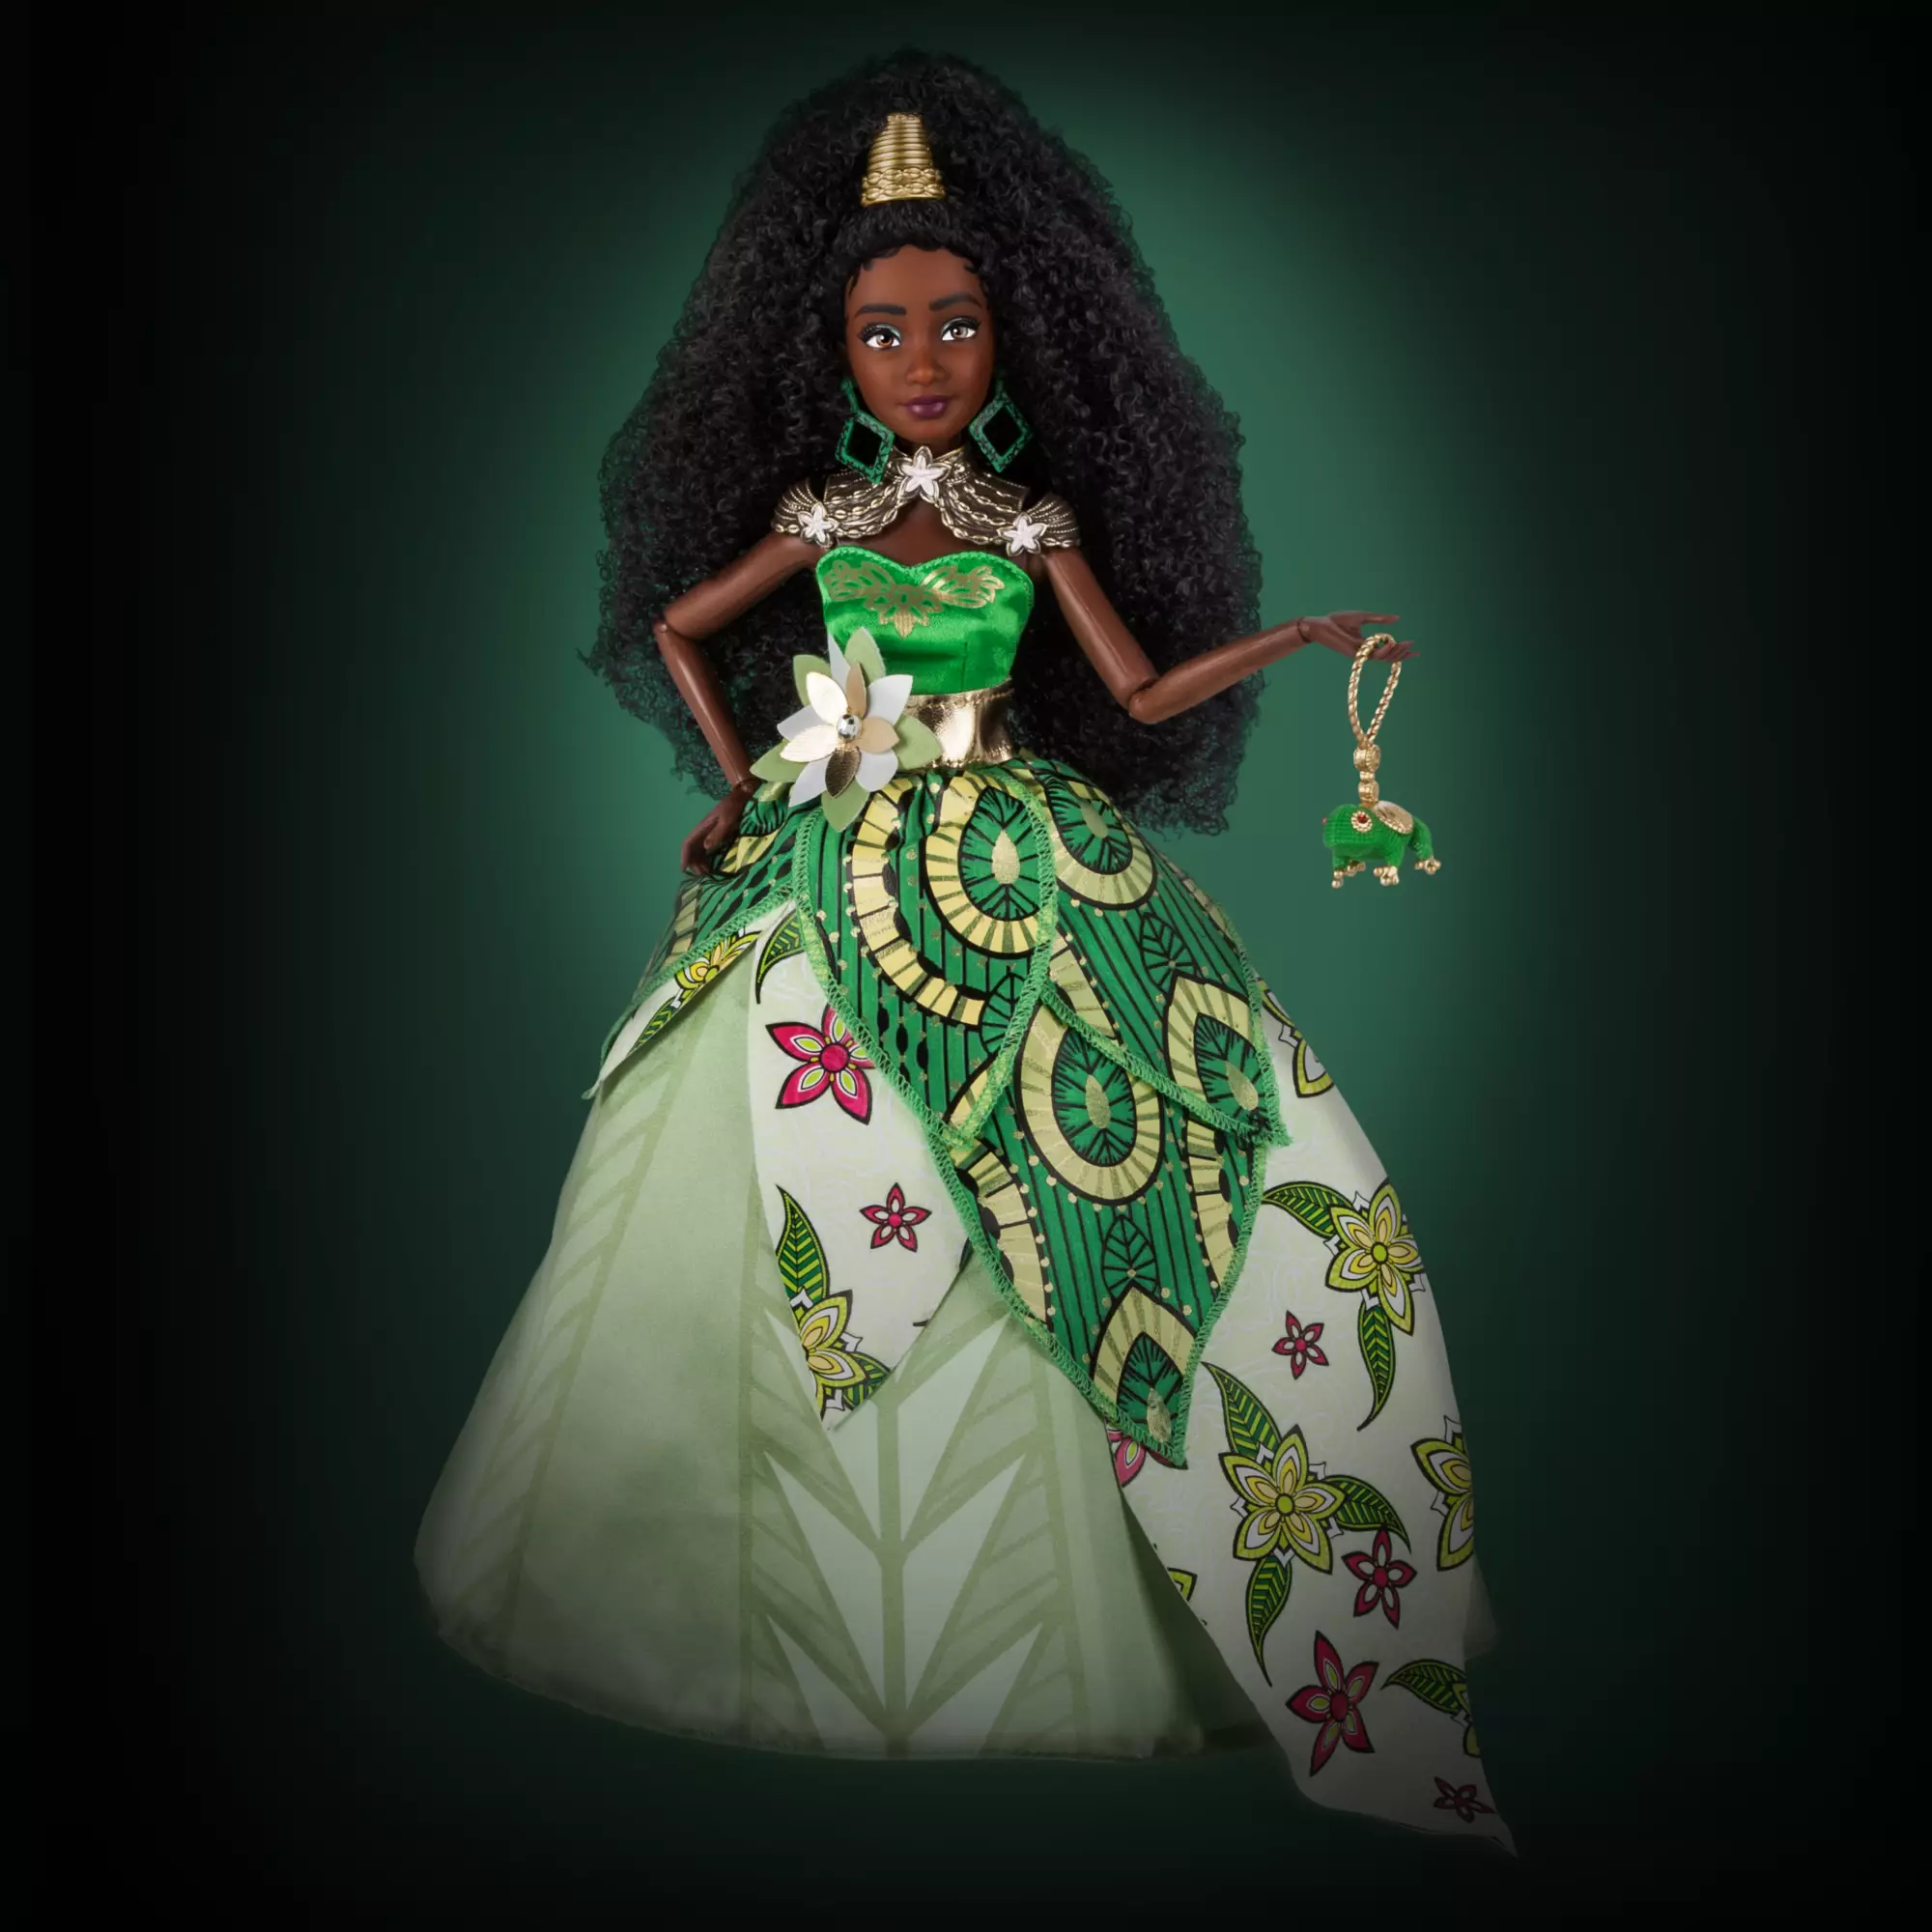 Stunning Photographs Reimagine Disney Princesses as Black Girls